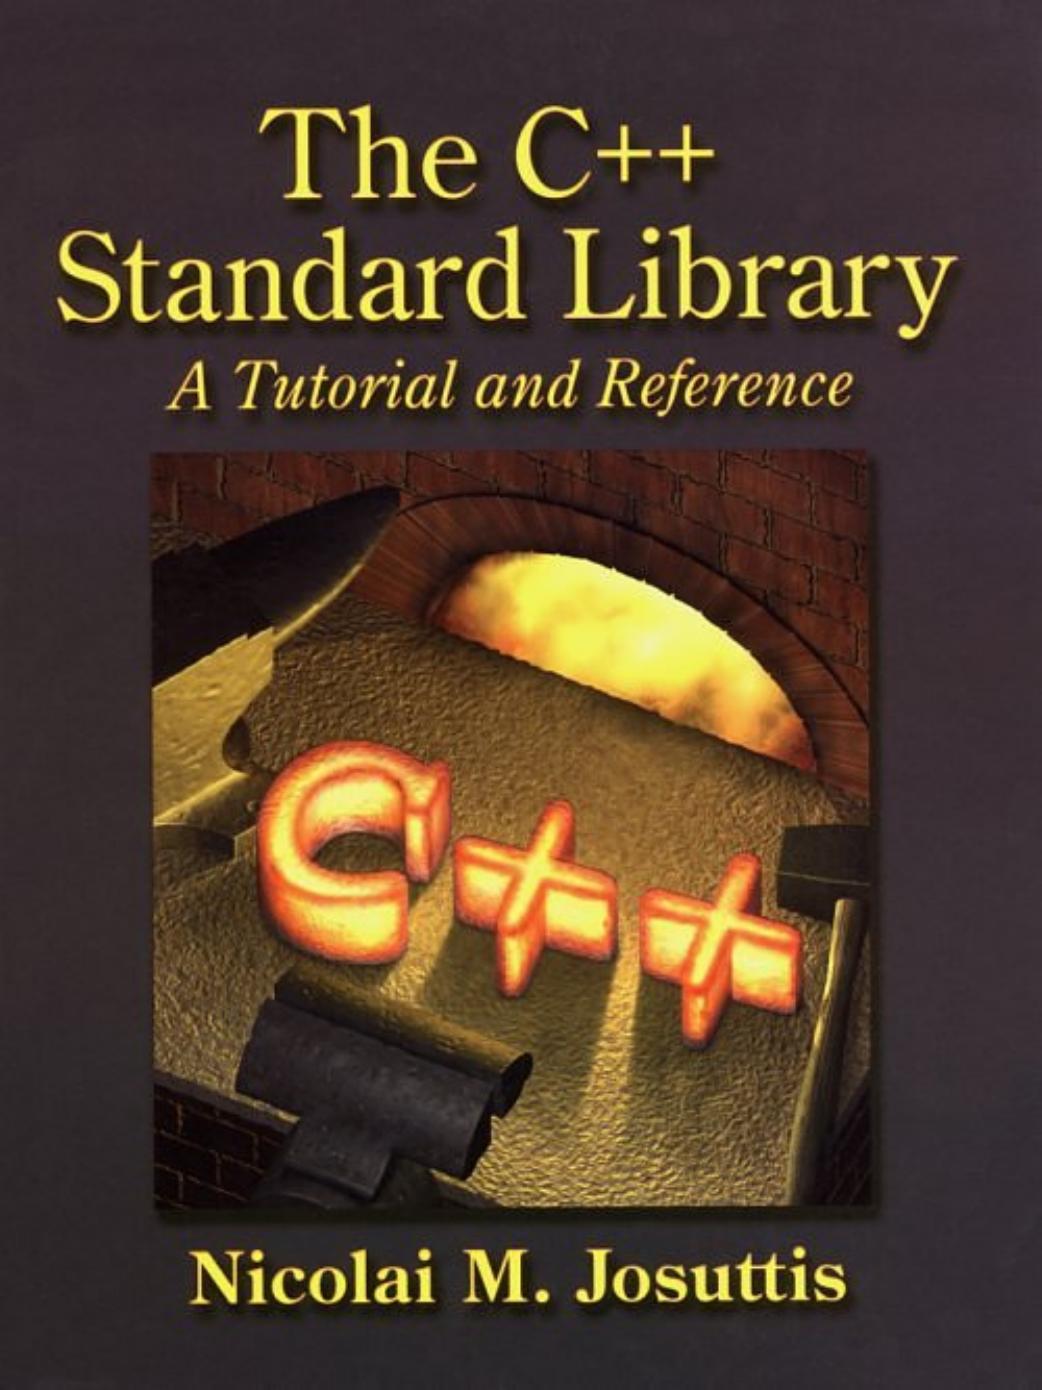 Microsoft Word - C++StandardLibrary.doc